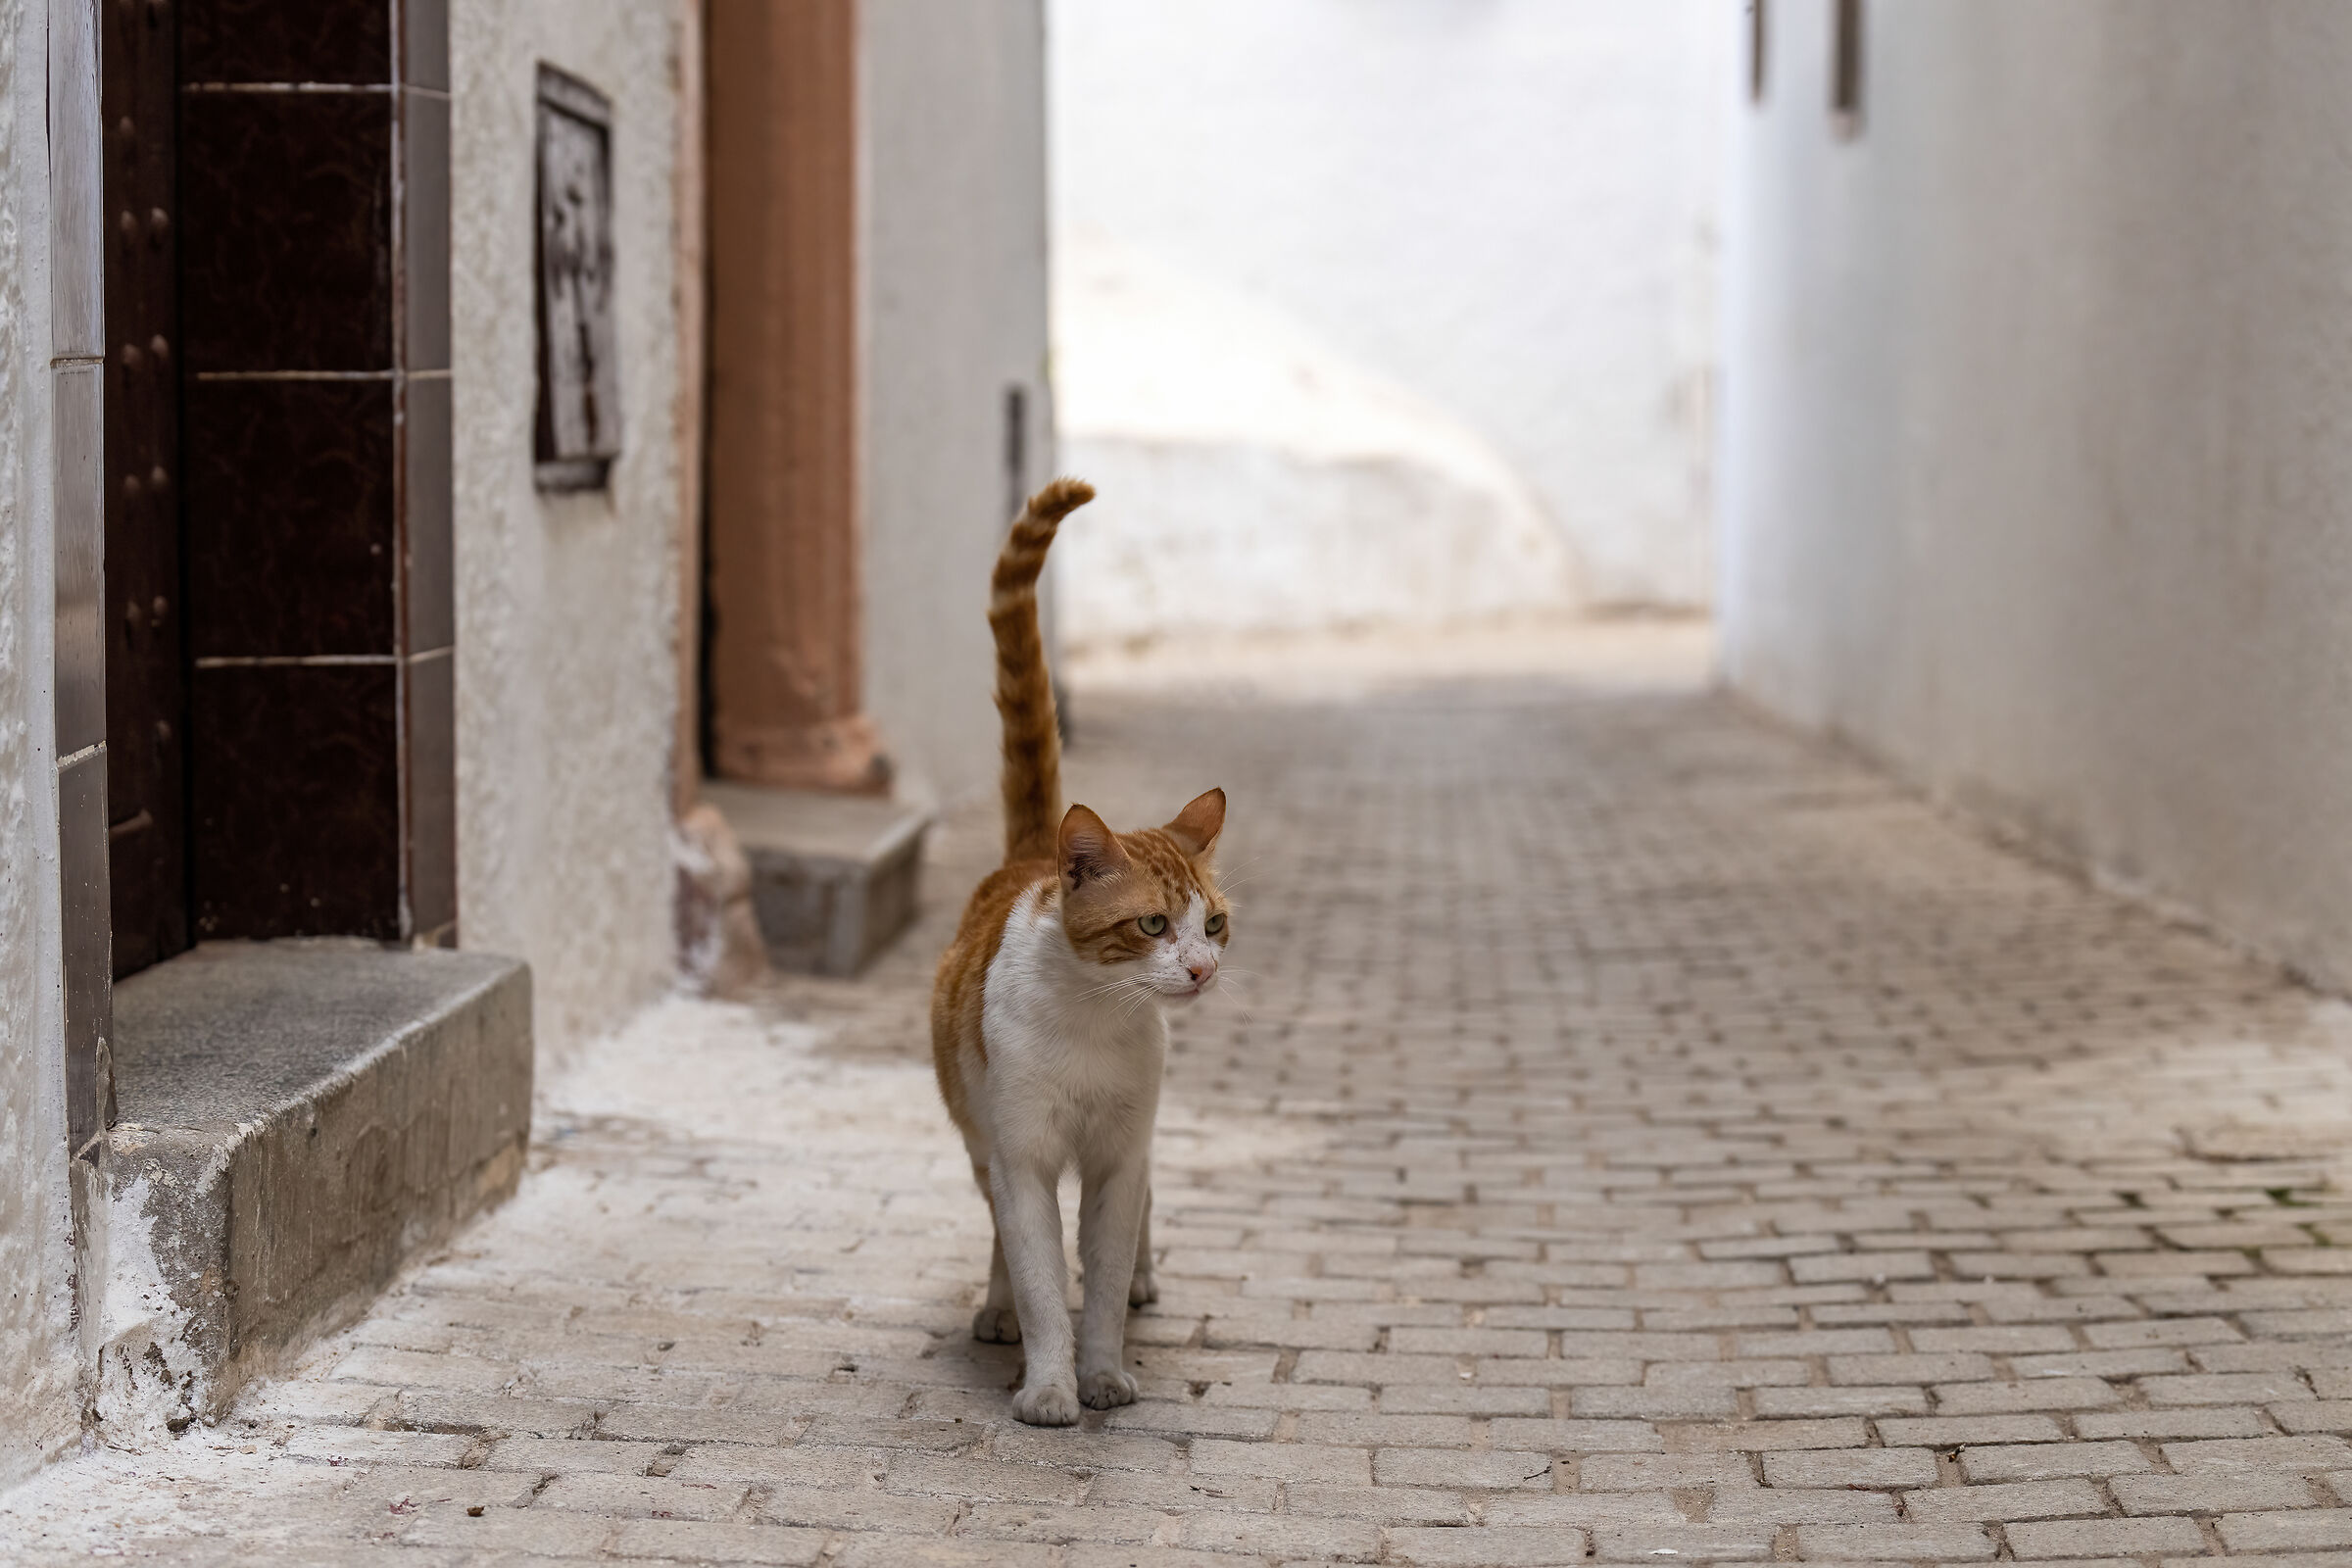 Cats of the Medina of Rabat (Morocco)...